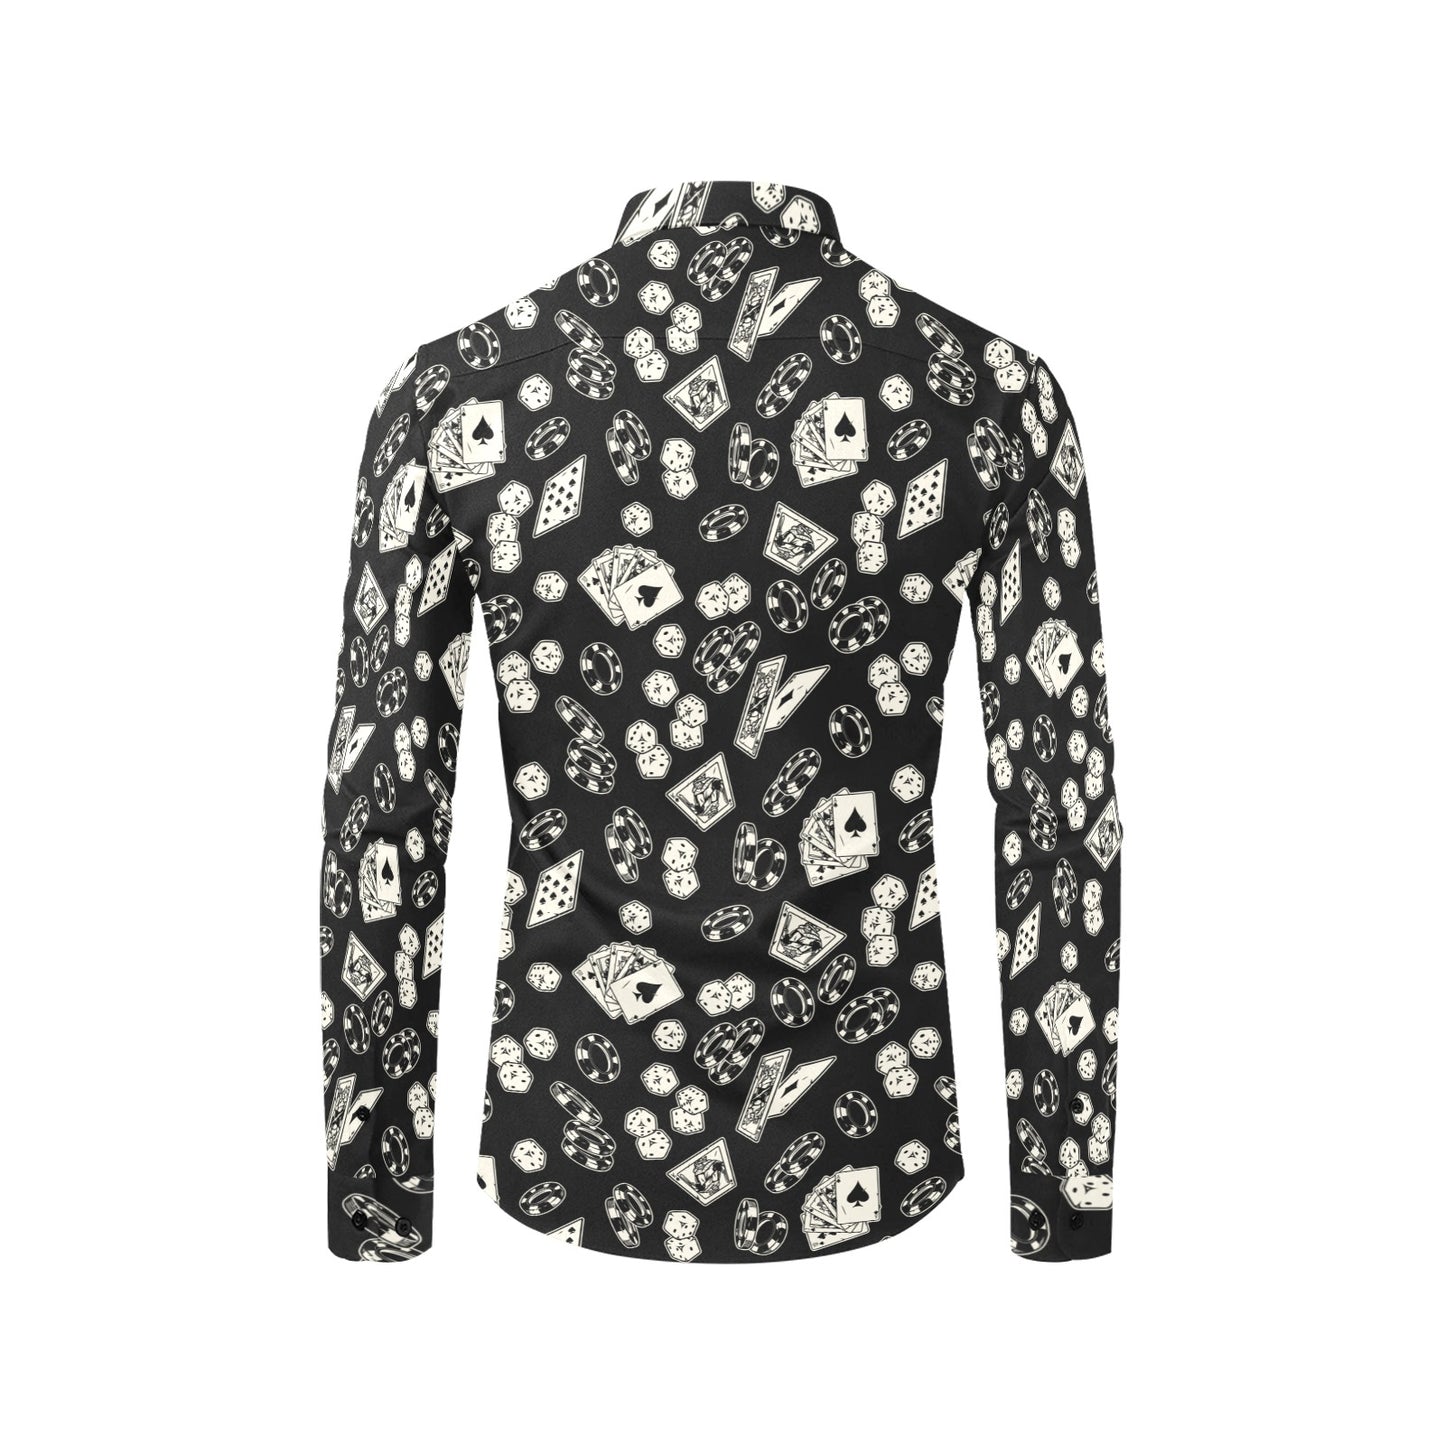 Casino Men Button Up Shirt, Long Sleeve Poker Gaming Gambling Print Dress Buttoned Collared Dress Shirt with Chest Pocket